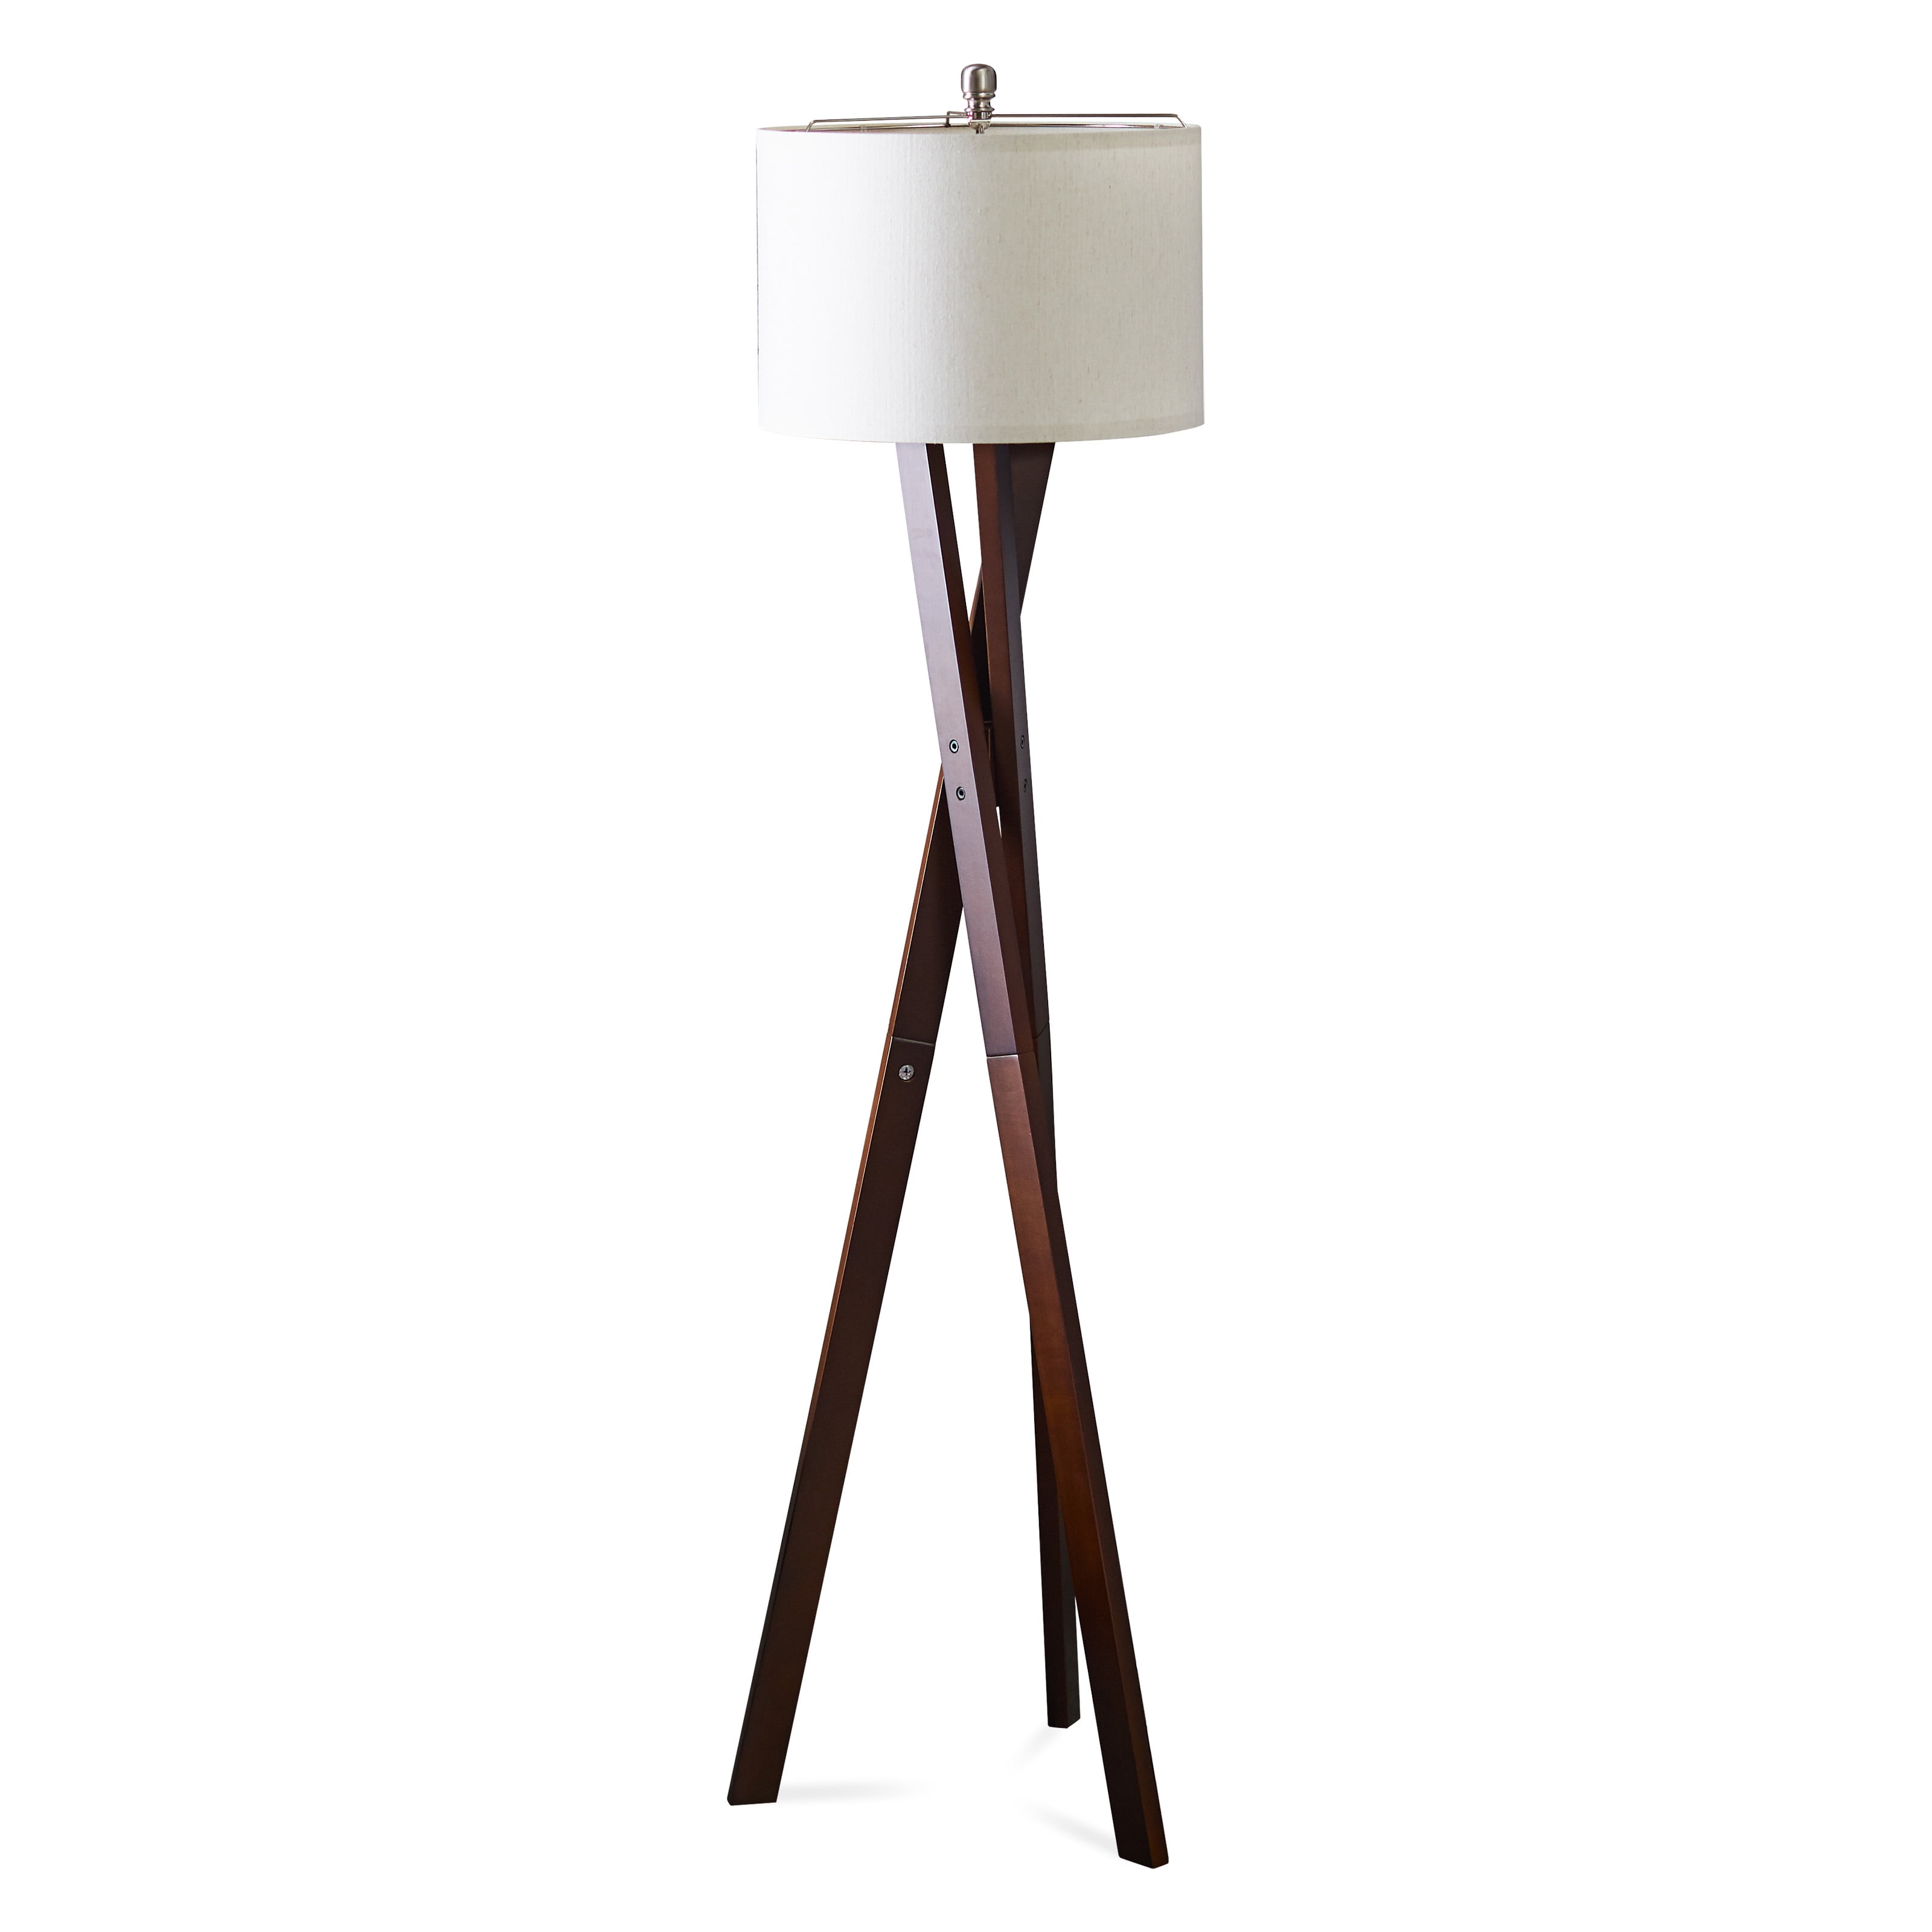 Modern Tripod Floor Lamp with Wood Base in Espresso Color - Walmart.com